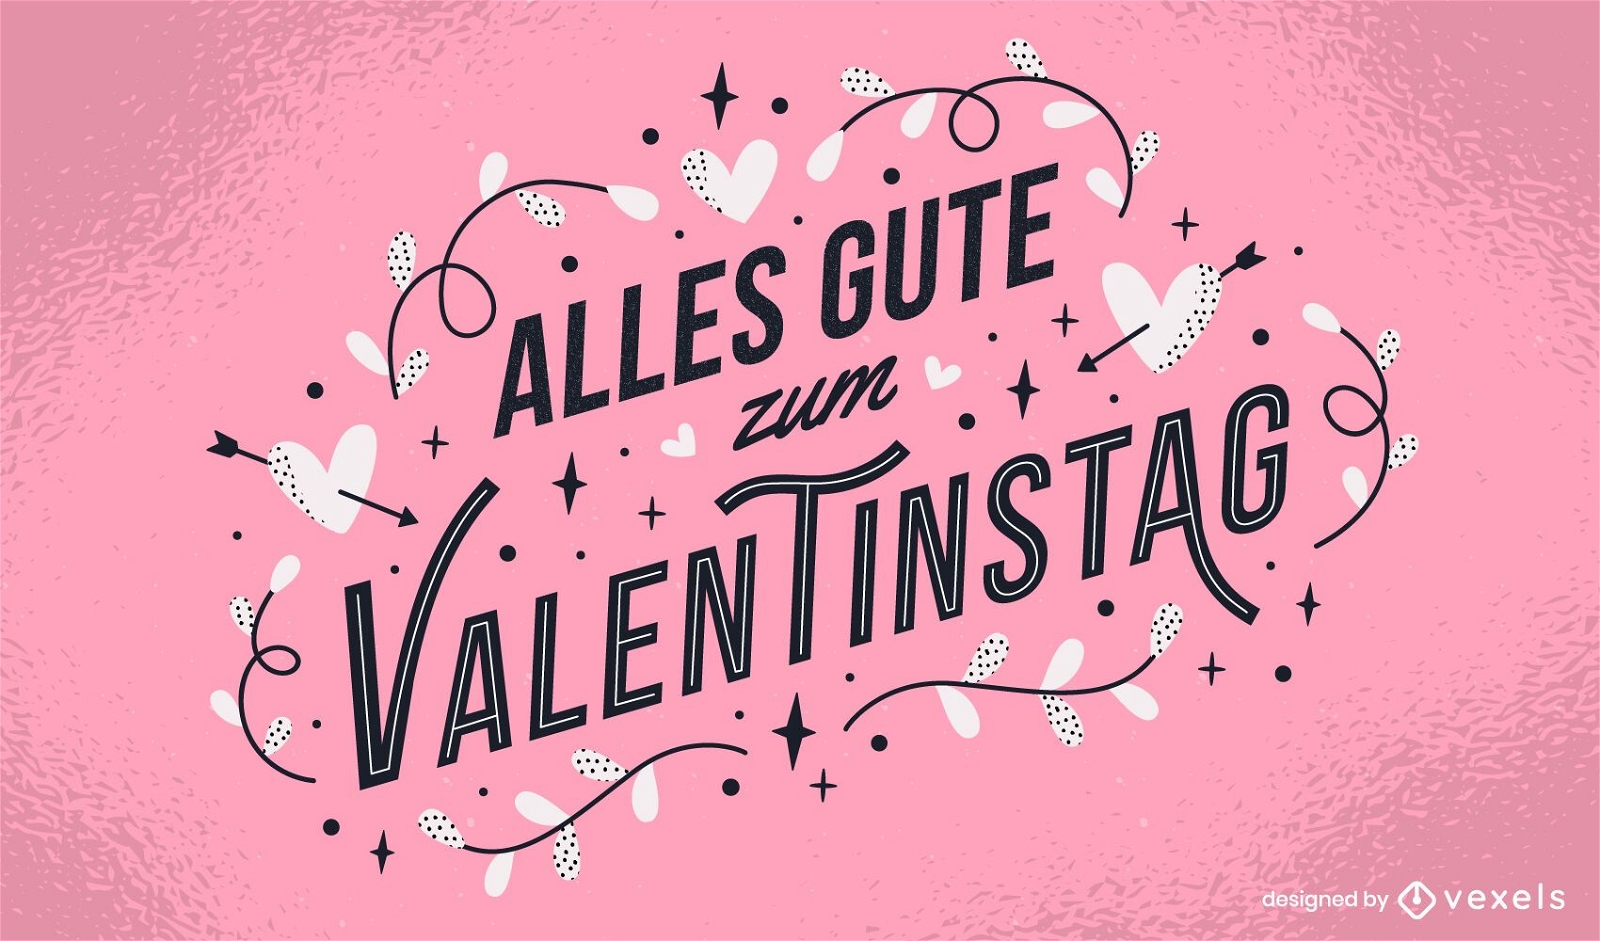 Valentinstag desenho de letras alemãs